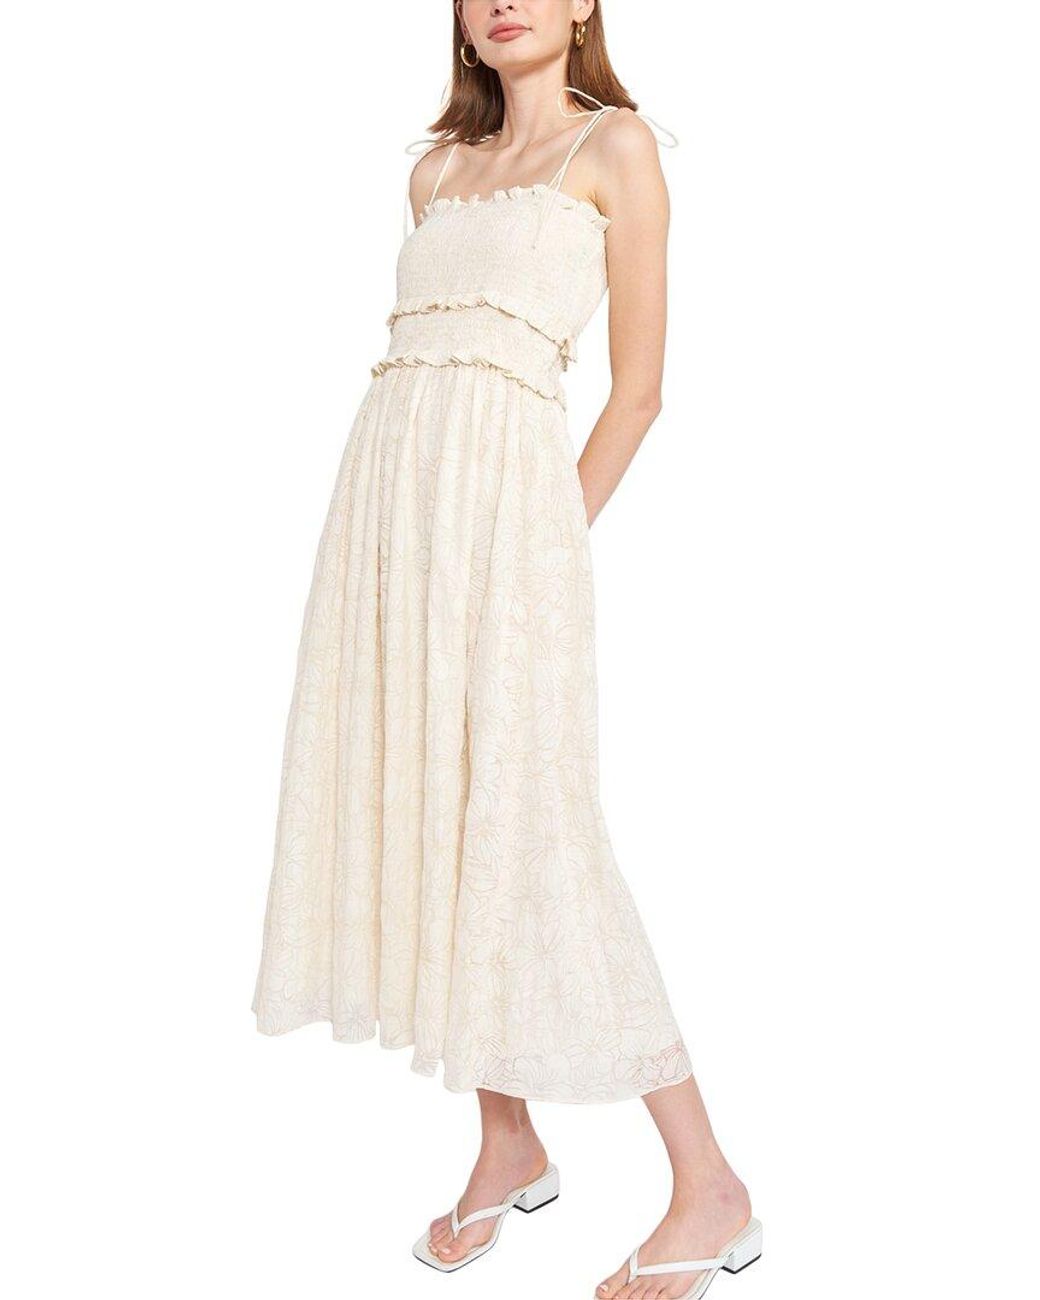 JACQUIE THE LABEL Juliette Midi Dress in White | Lyst Canada